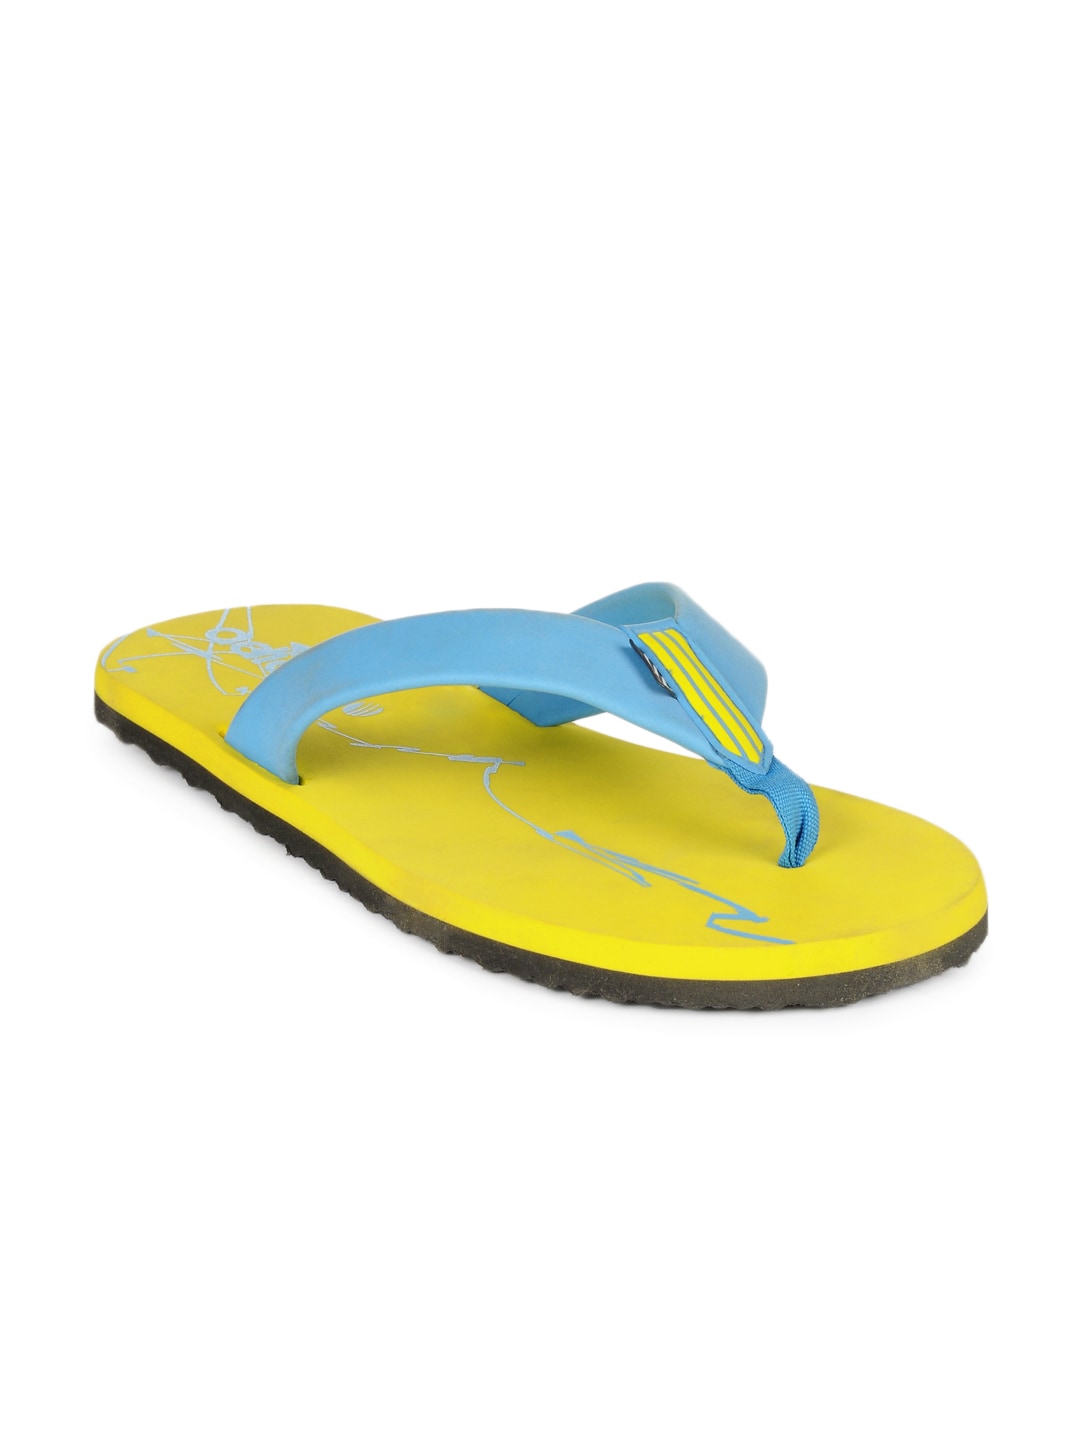 ADIDAS Men Yellow Lucent Scribble Slide Flip Flops